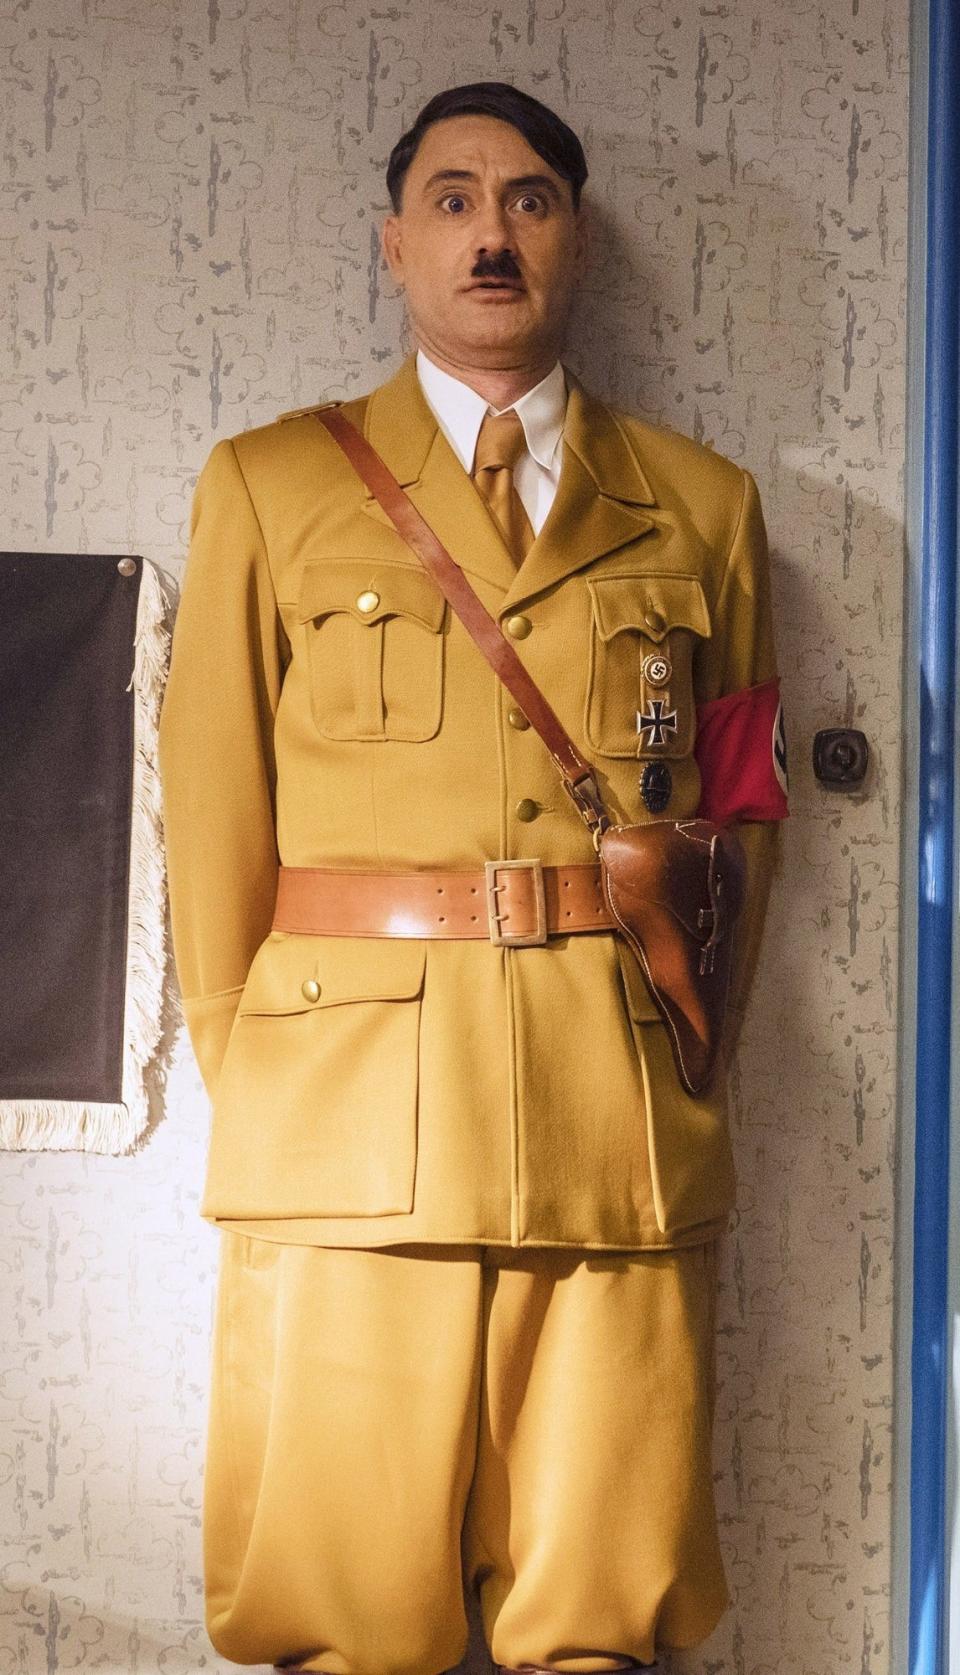 Taika in the film as Hitler